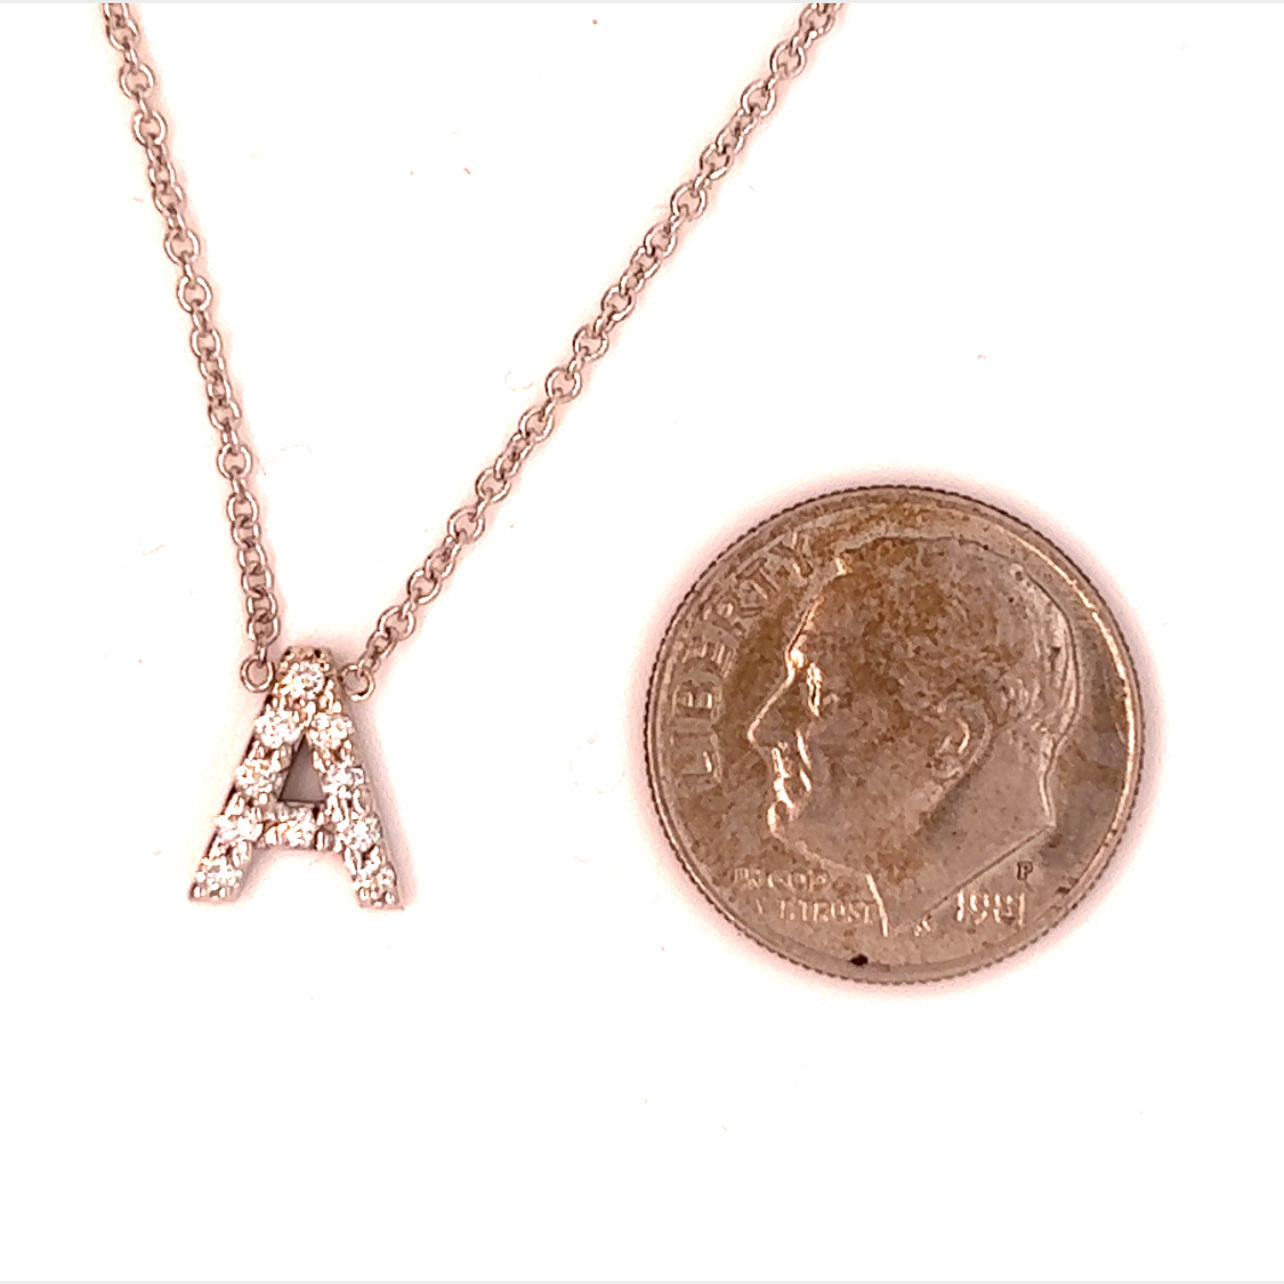 Diamond Letter "A" Pendant Necklace 18" 14k Gold 0.12 TCW Certified $1,950 121279 - Certified Fine Jewelry